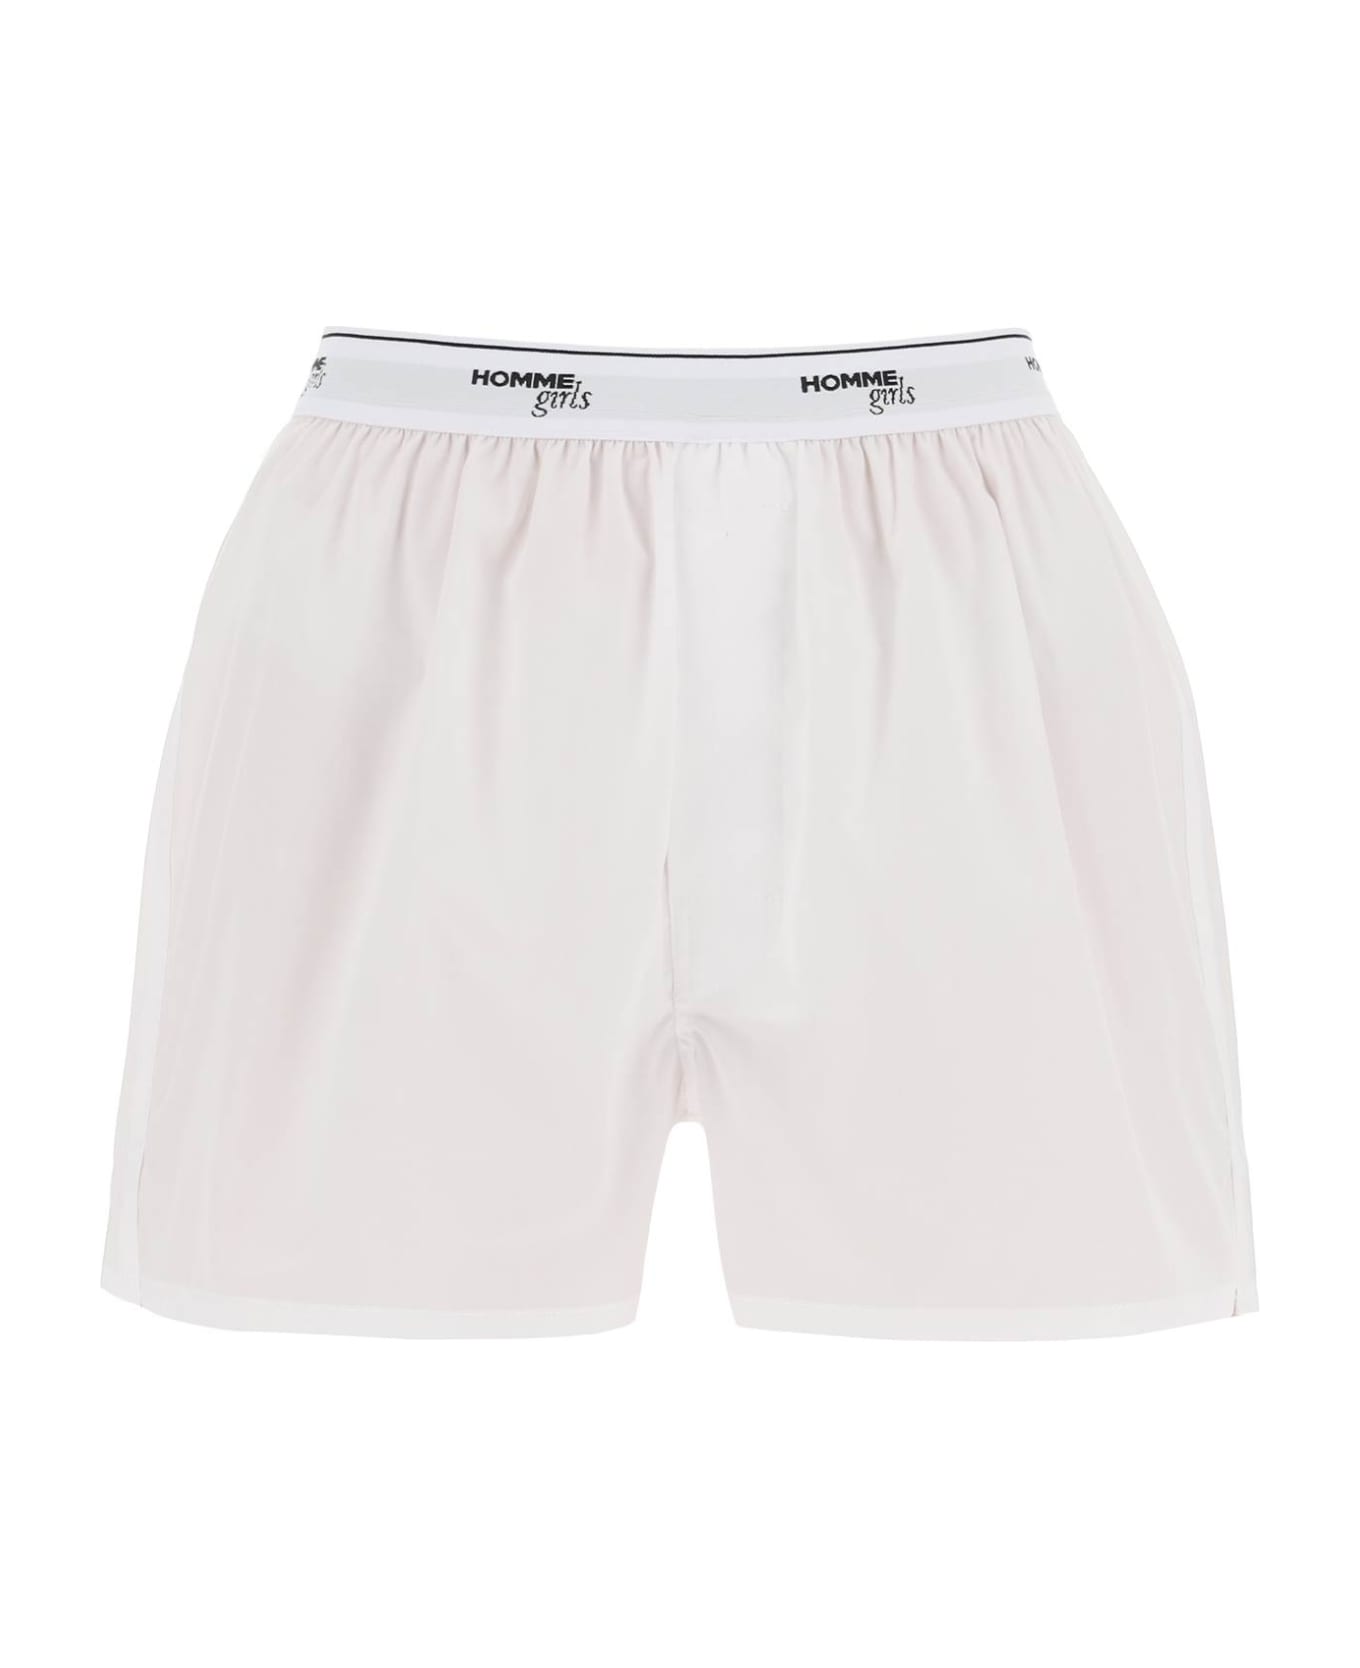 HommeGirls Cotton Boxer Shorts - WHITE (Light blue)